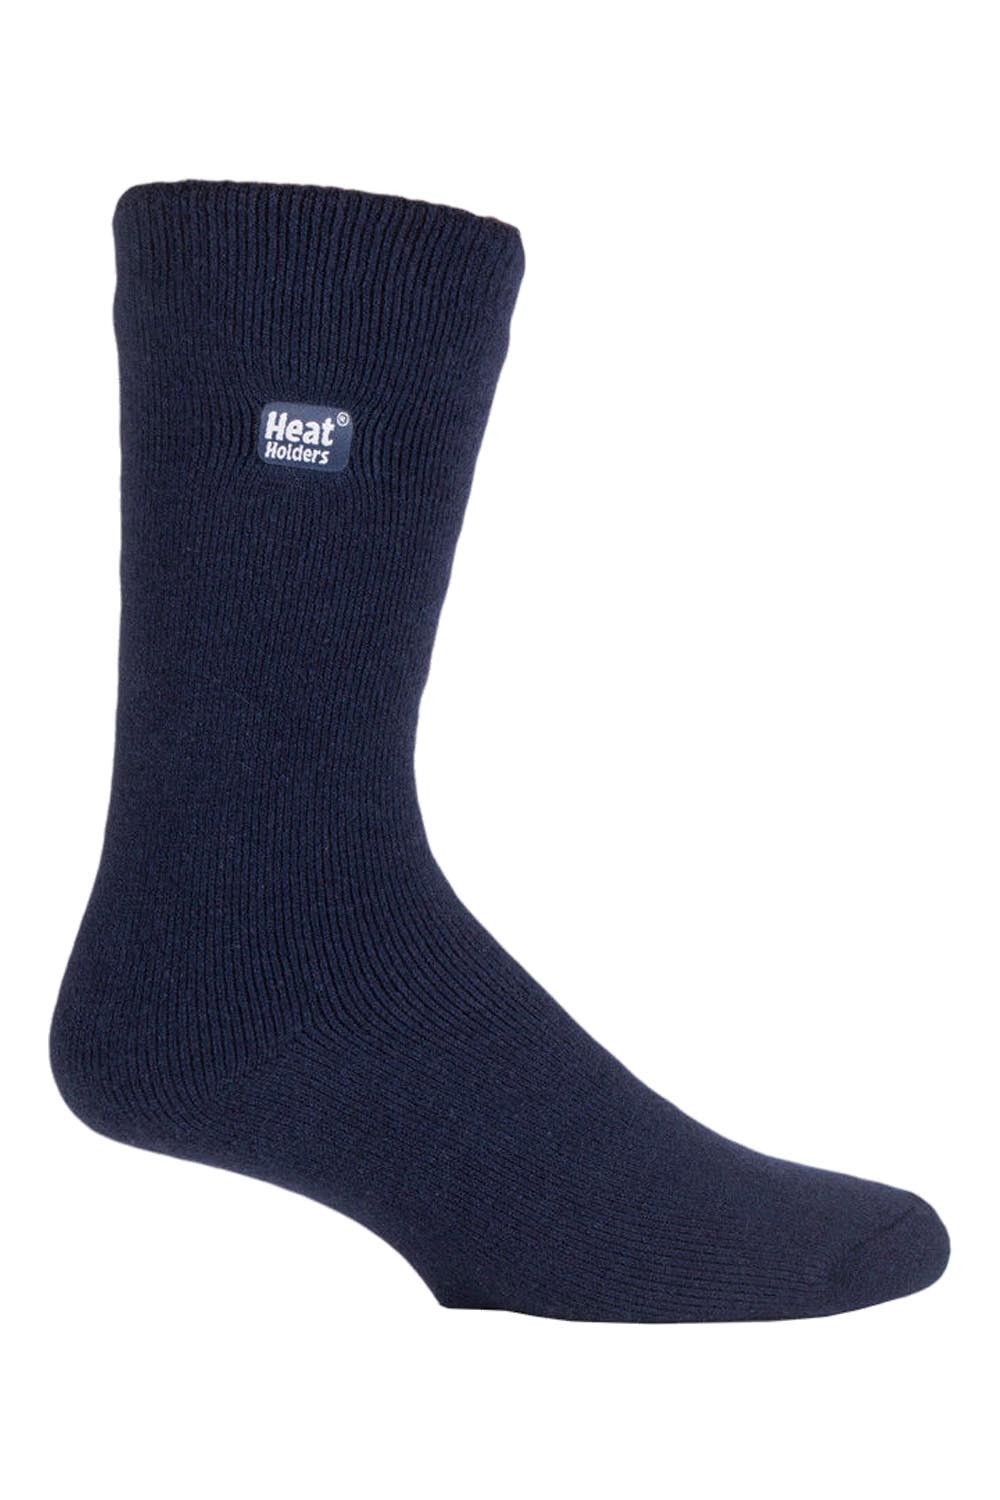 Ultra Lite Mens Lightweight Thermal Socks -